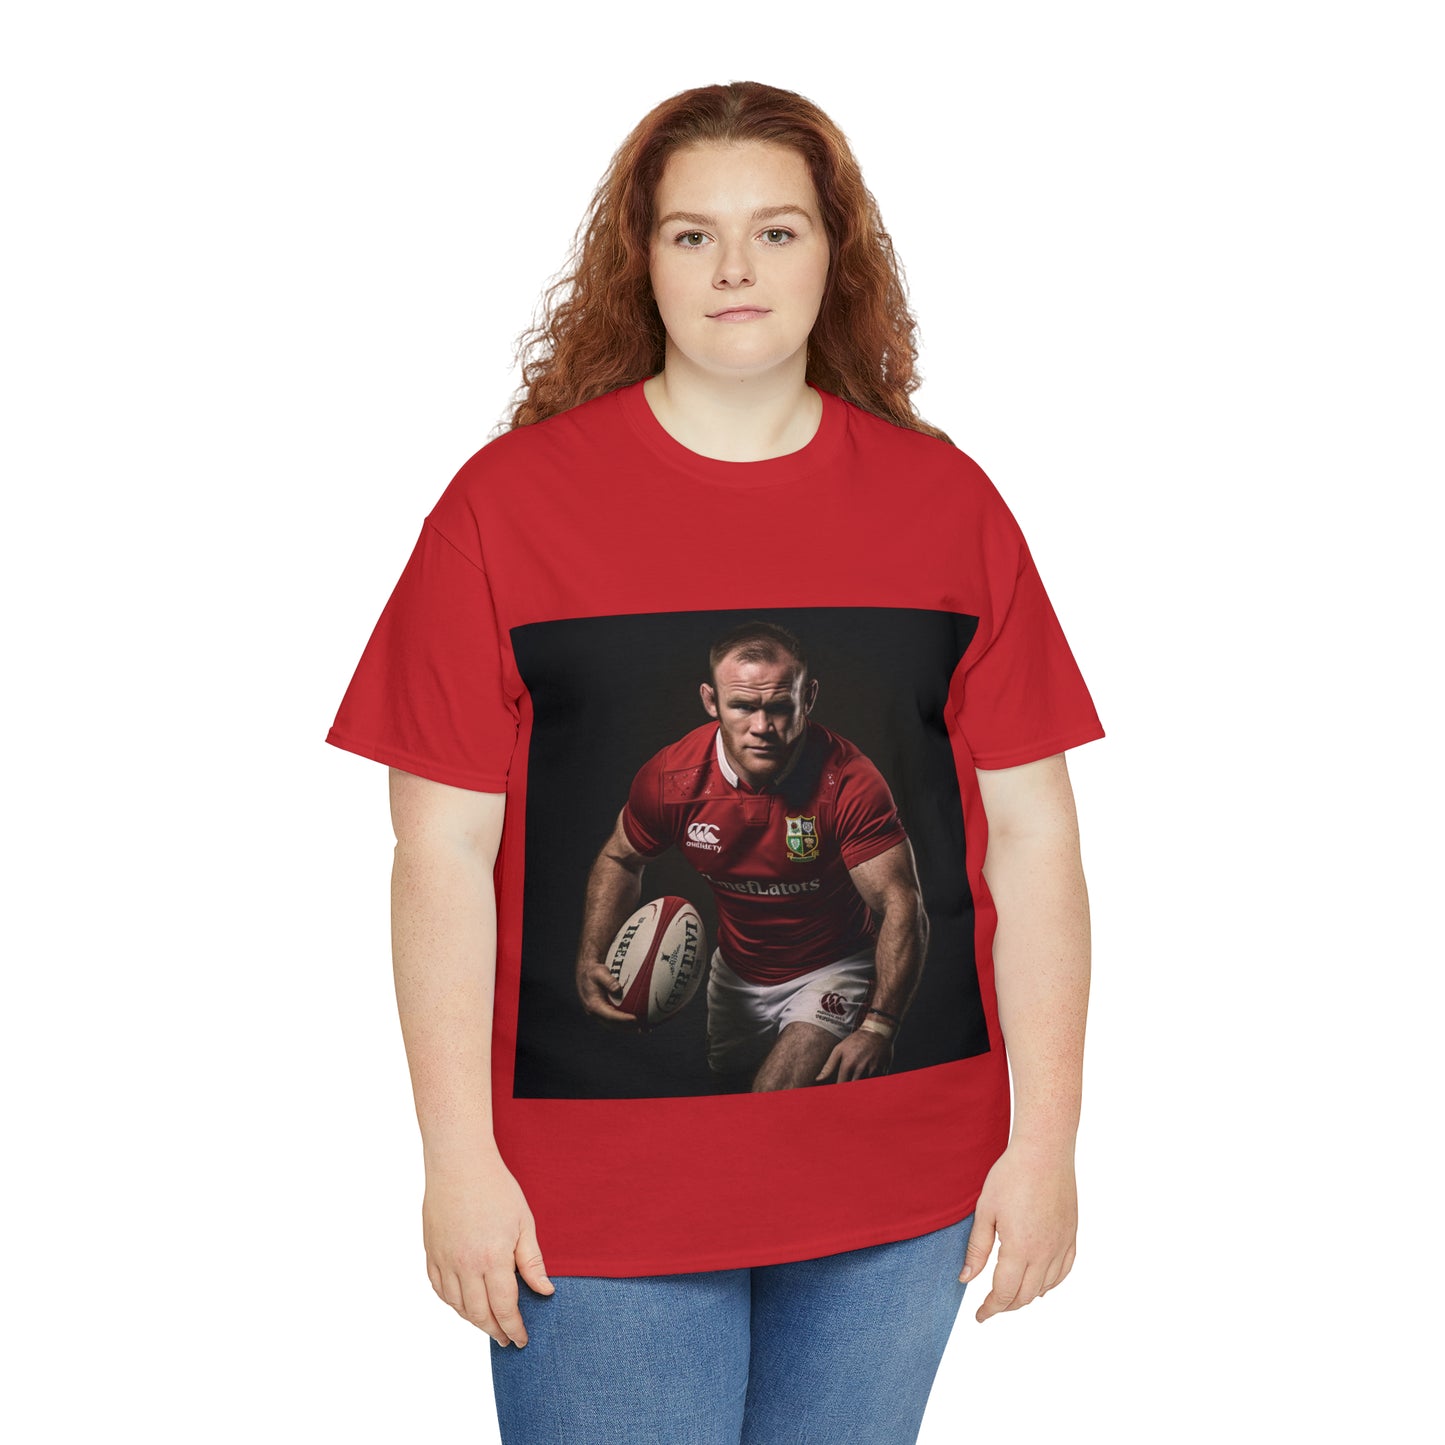 Ready Rooney - dark shirts